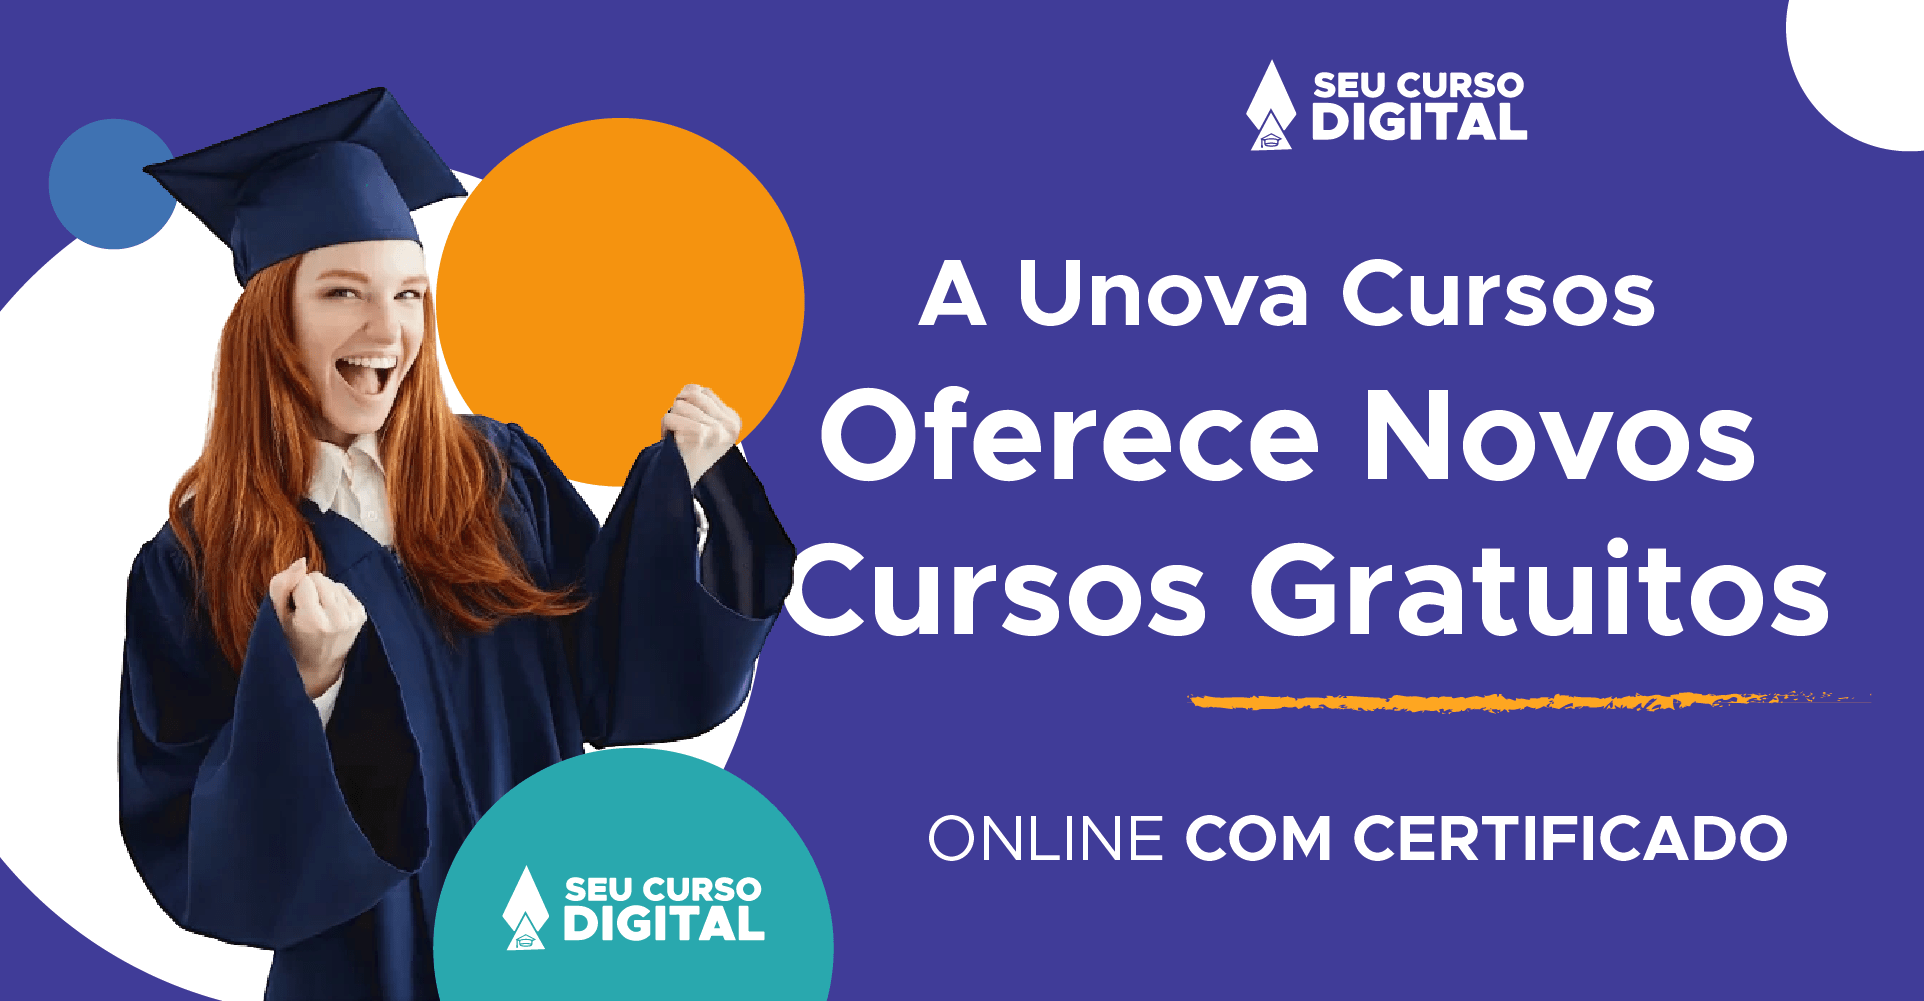 🛑 NOVO SITE DE CURSOS ONLINE GRATUITOS - Unova Cursos Online